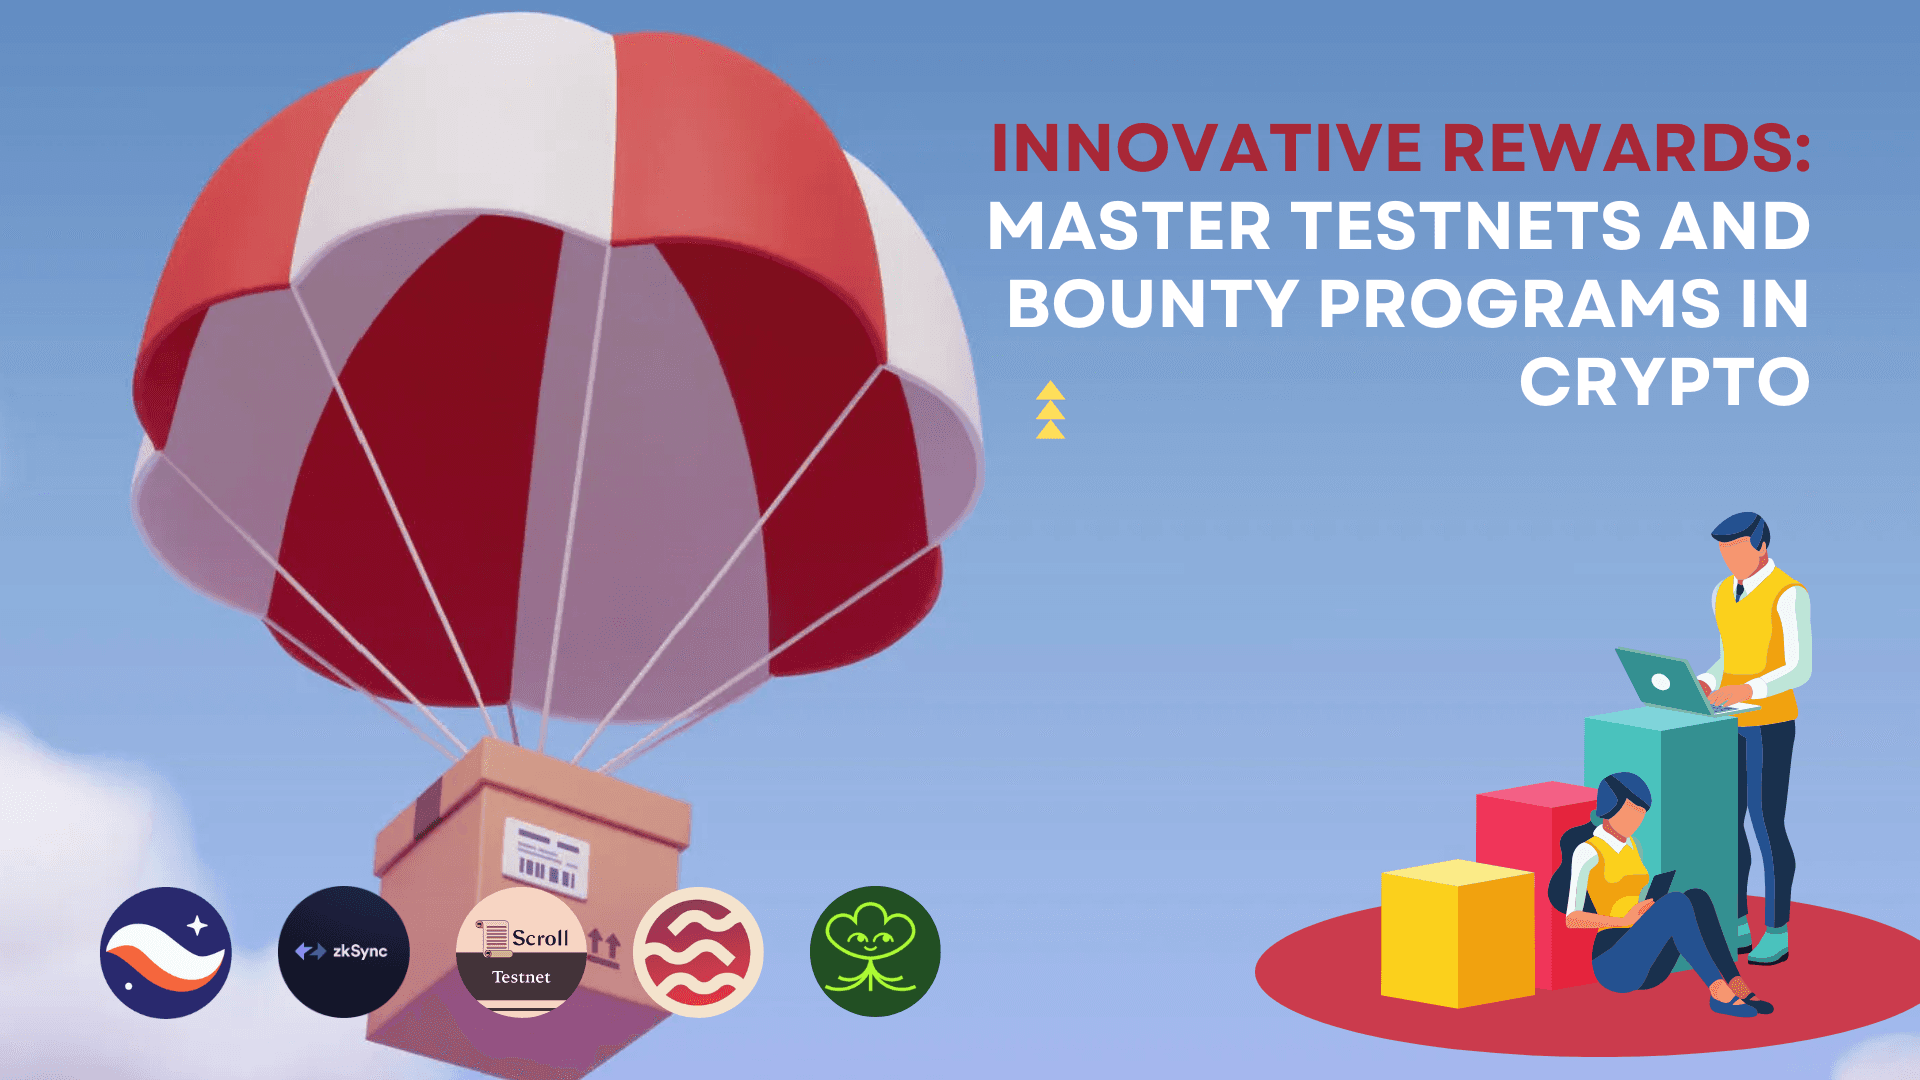 Innovative Rewards: Master Testnets and Bounty Programs in Crypto